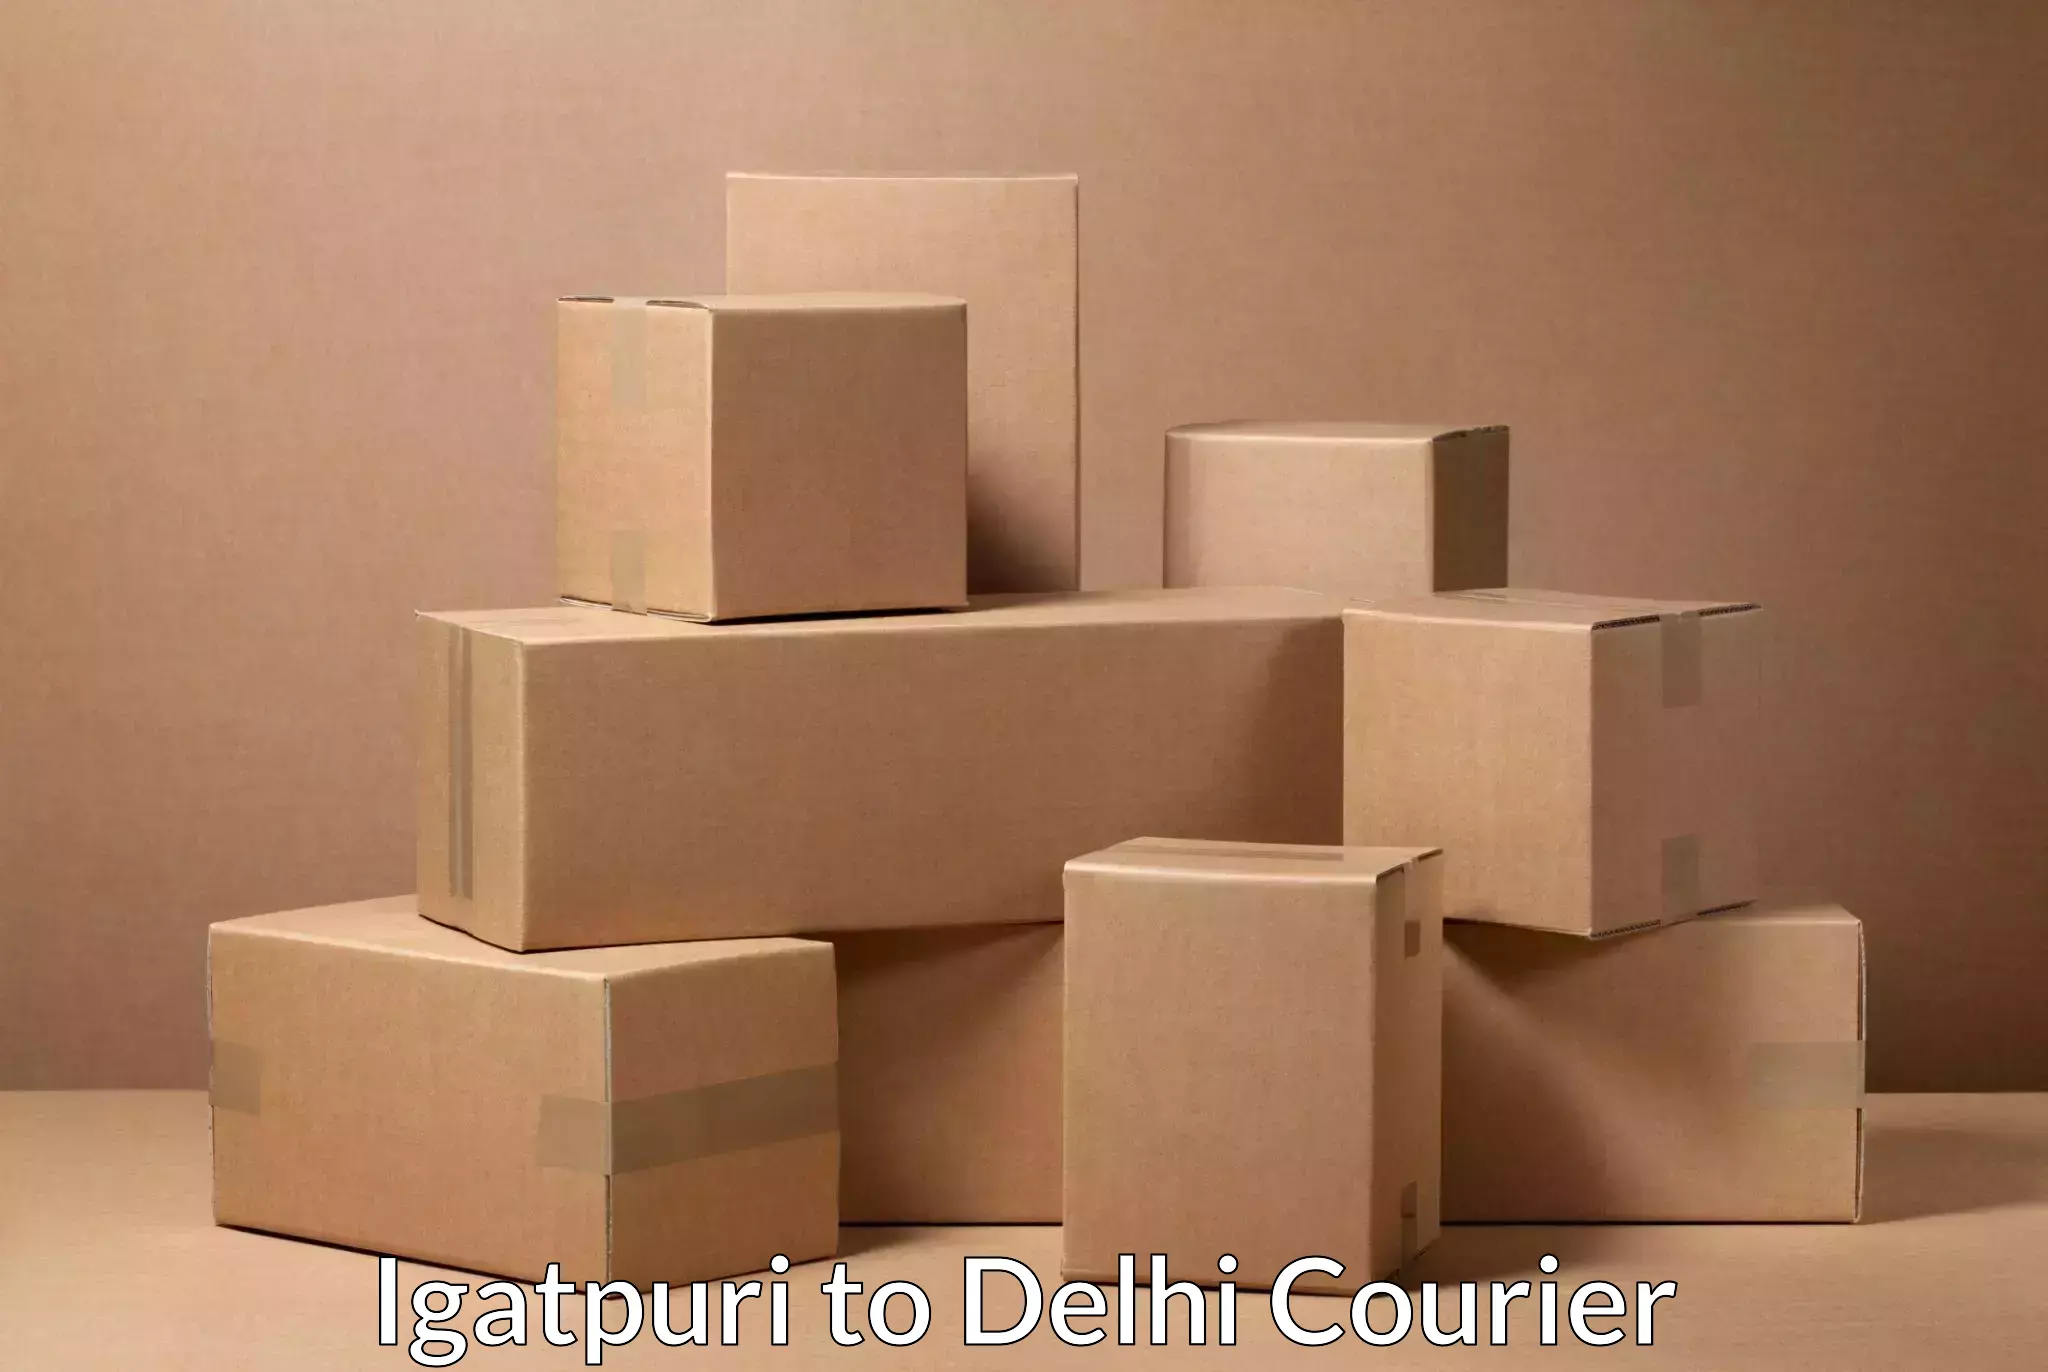 Courier service comparison Igatpuri to Krishna Nagar